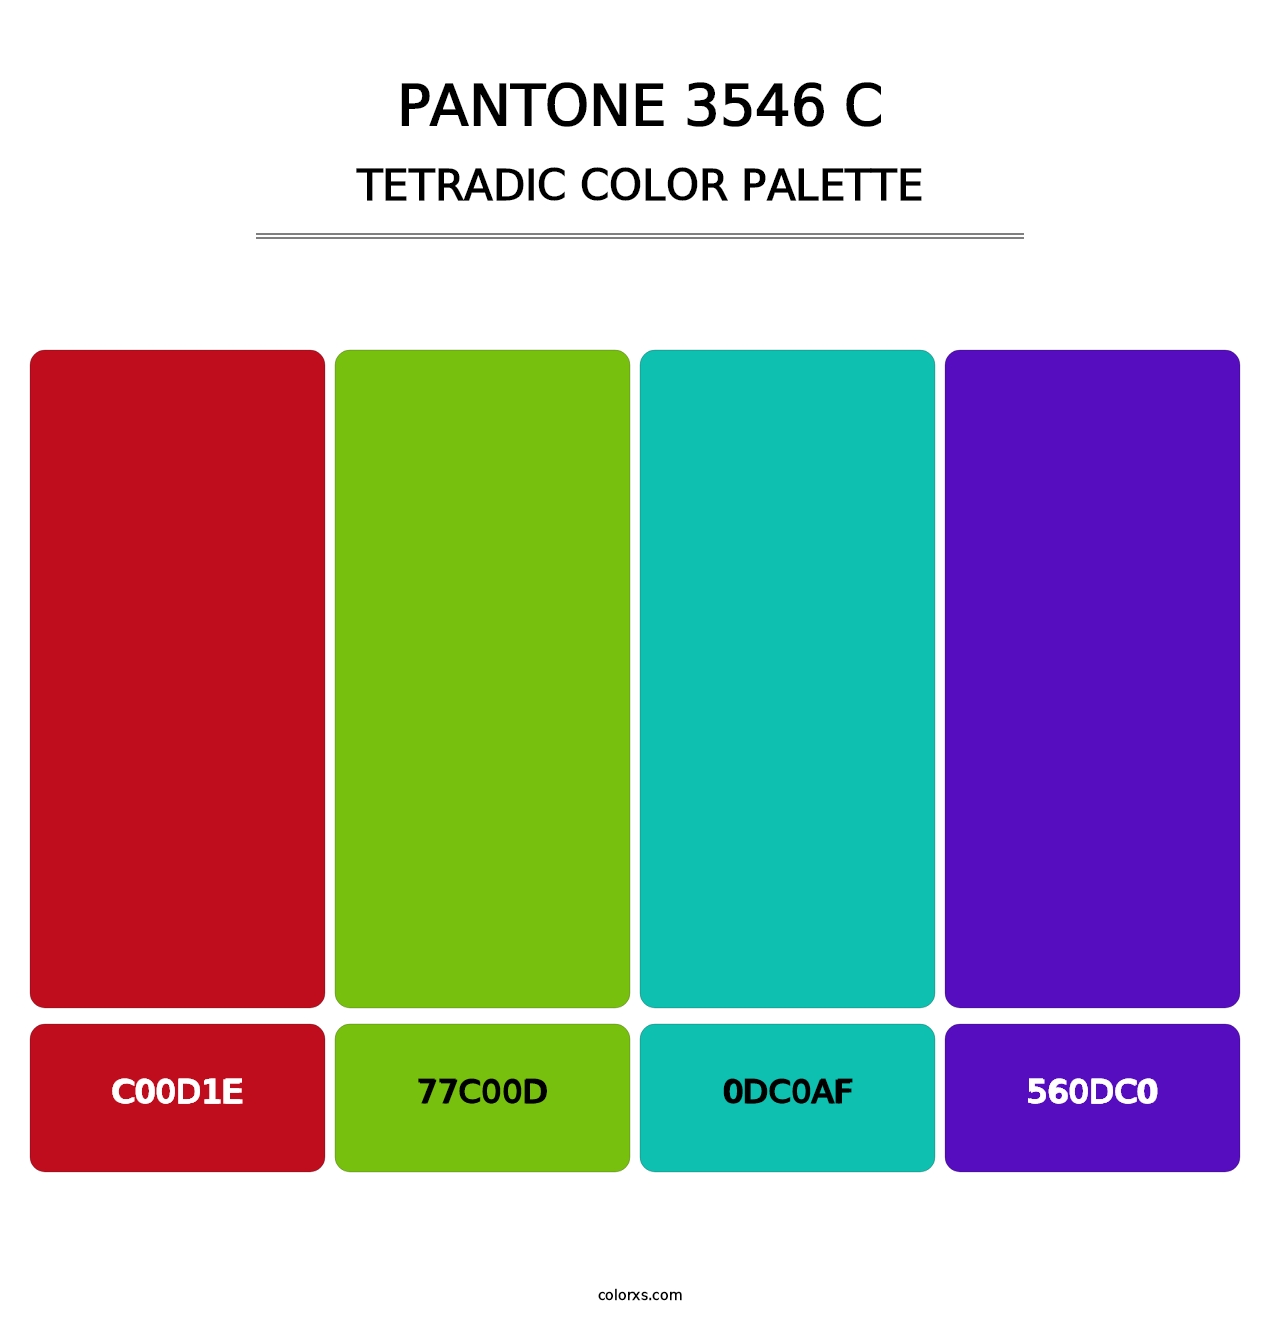 PANTONE 3546 C - Tetradic Color Palette